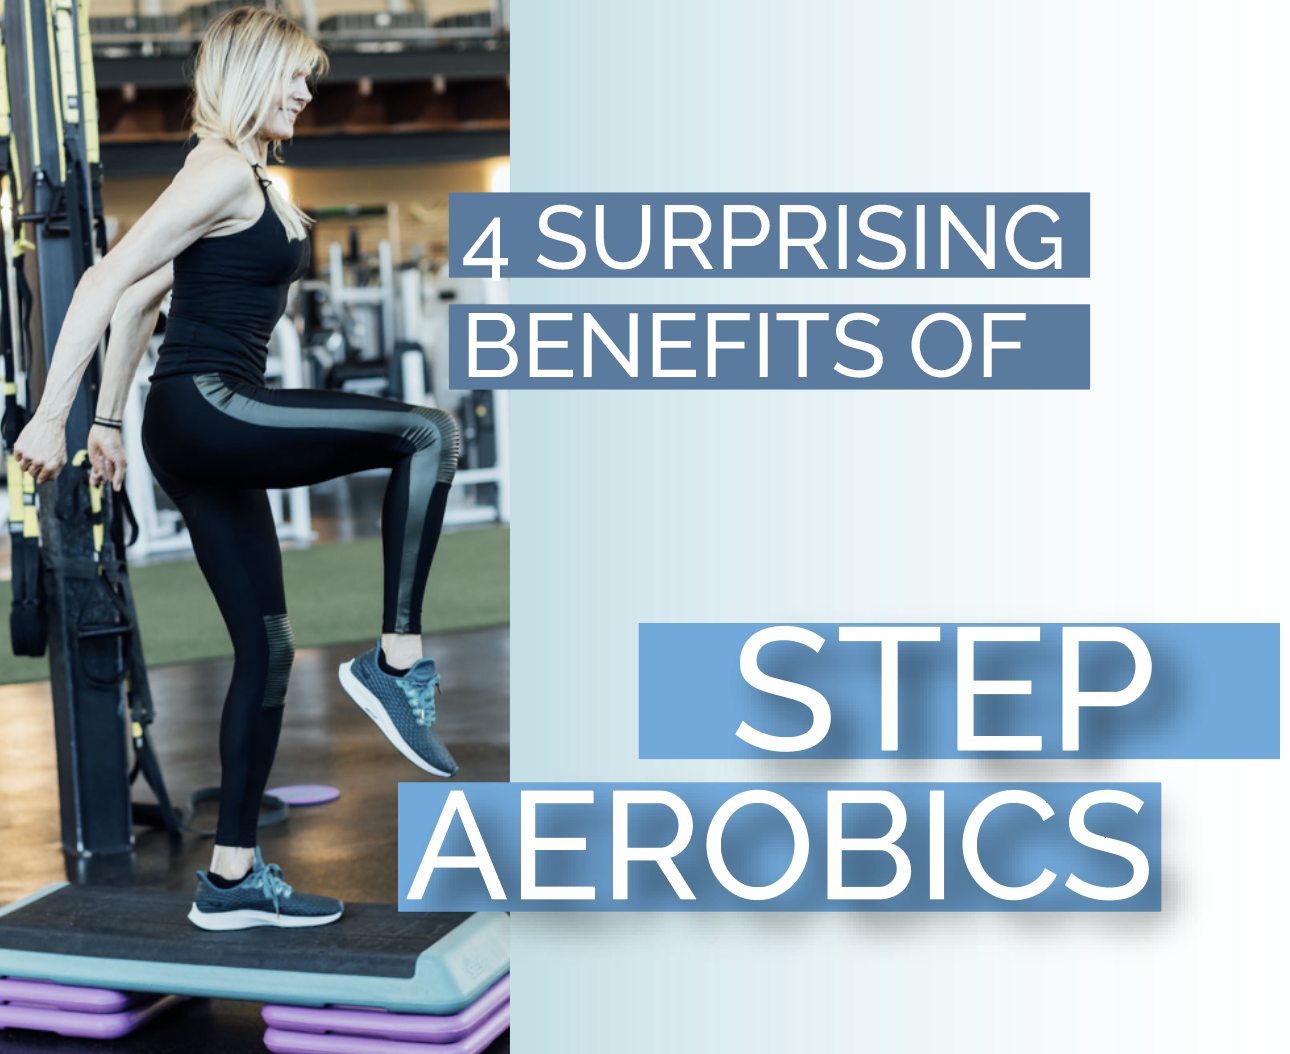 4 Surprising Benefits of Step Aerobics - Kathy Smith